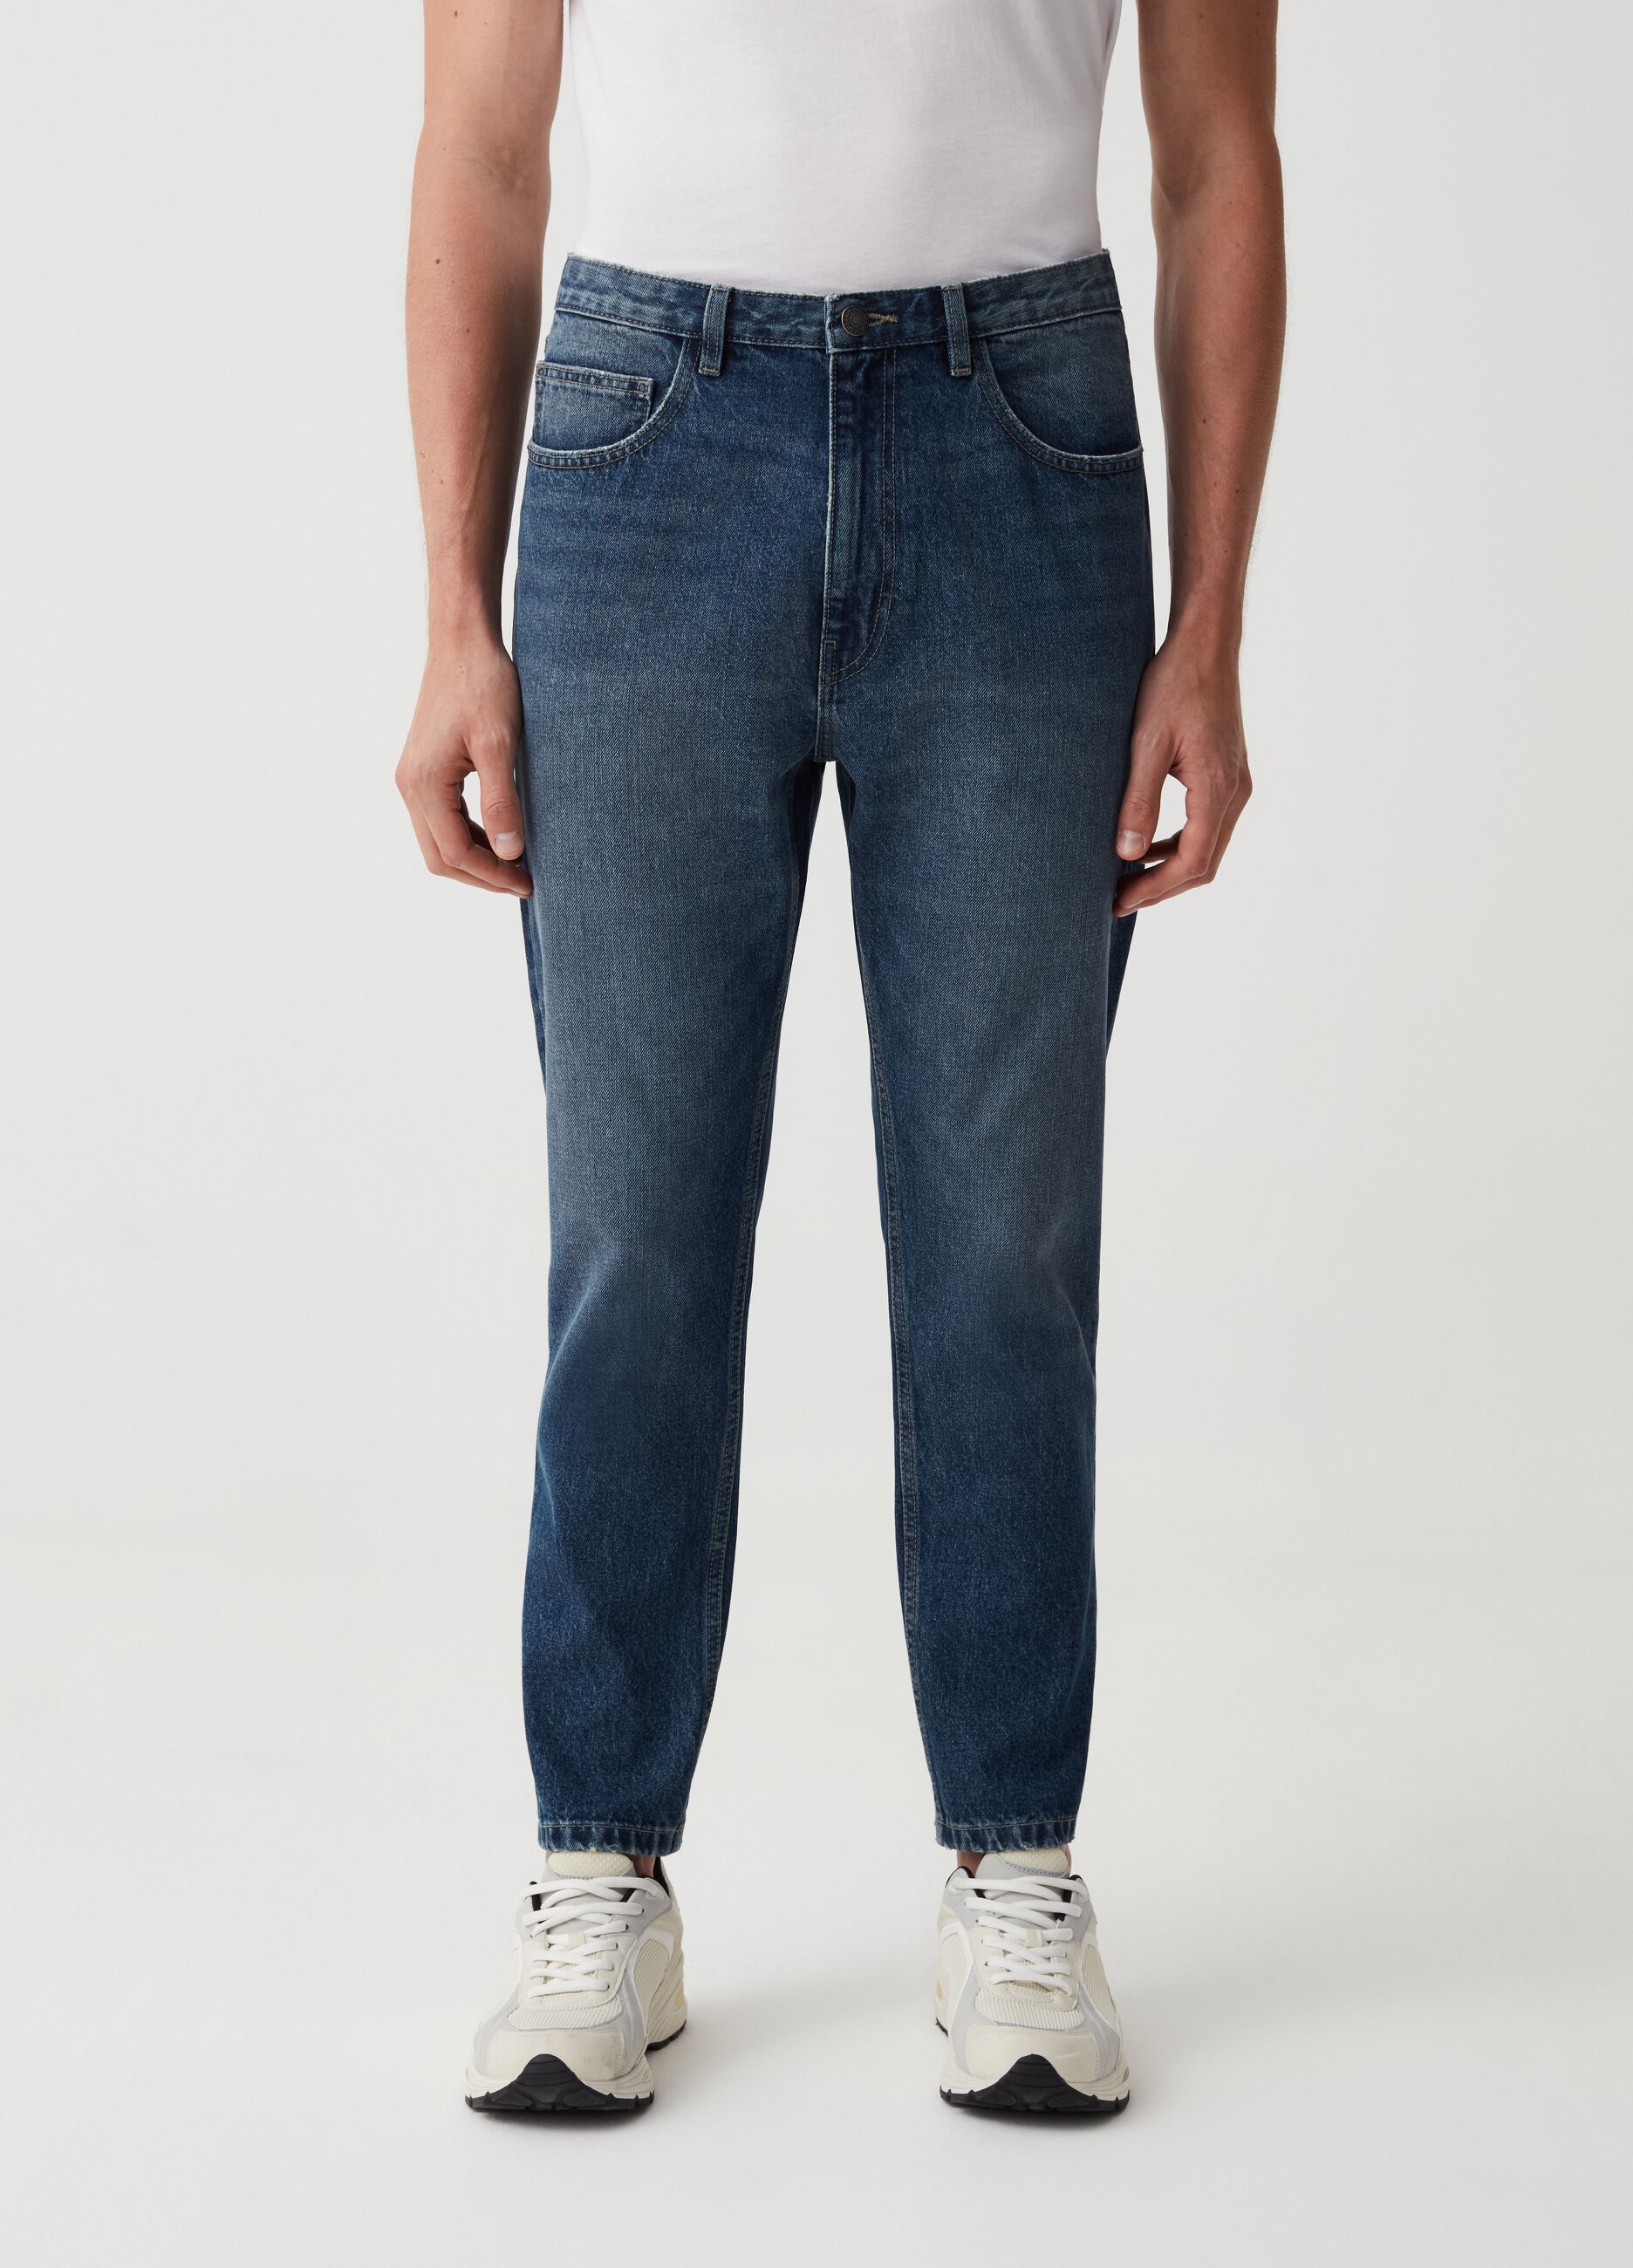 Bershka RIPPED CARROT FIT - Slim fit jeans - blue denim - Zalando.de